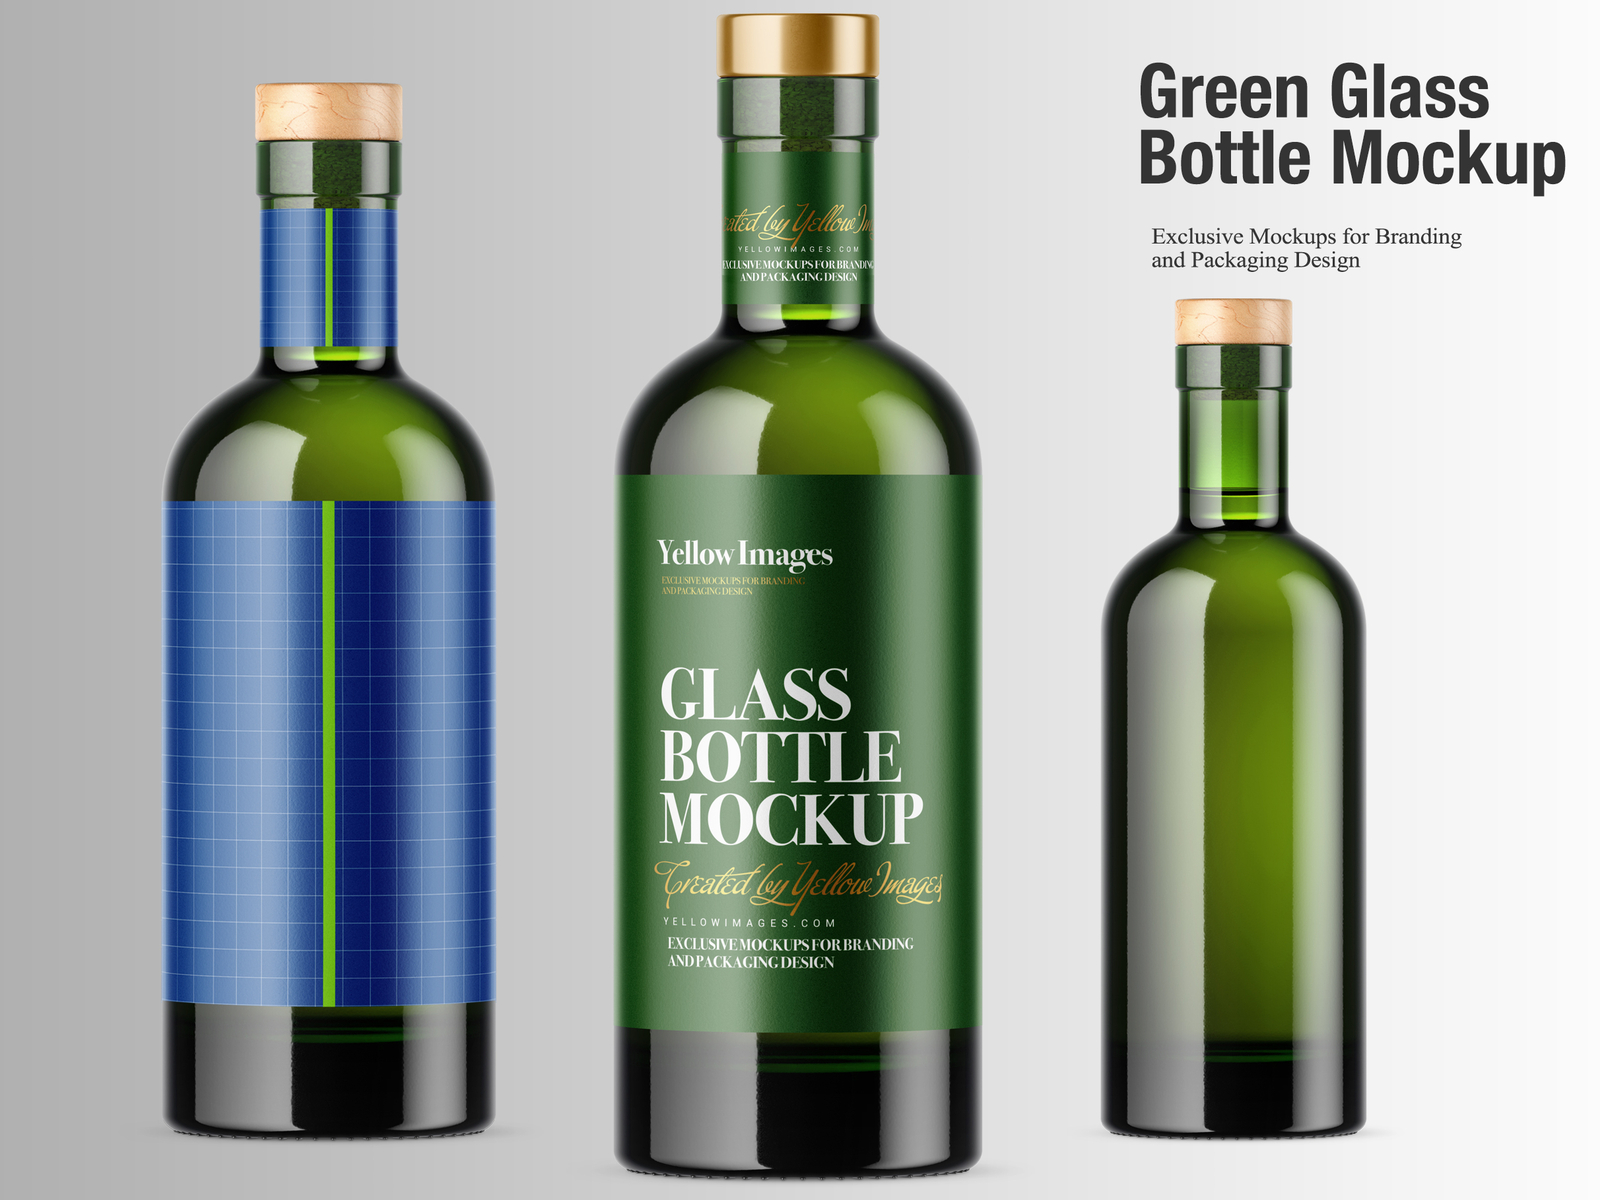 Wine Bottle Mockup Scene Download Free And Premium Quality Psd Mockup Templates